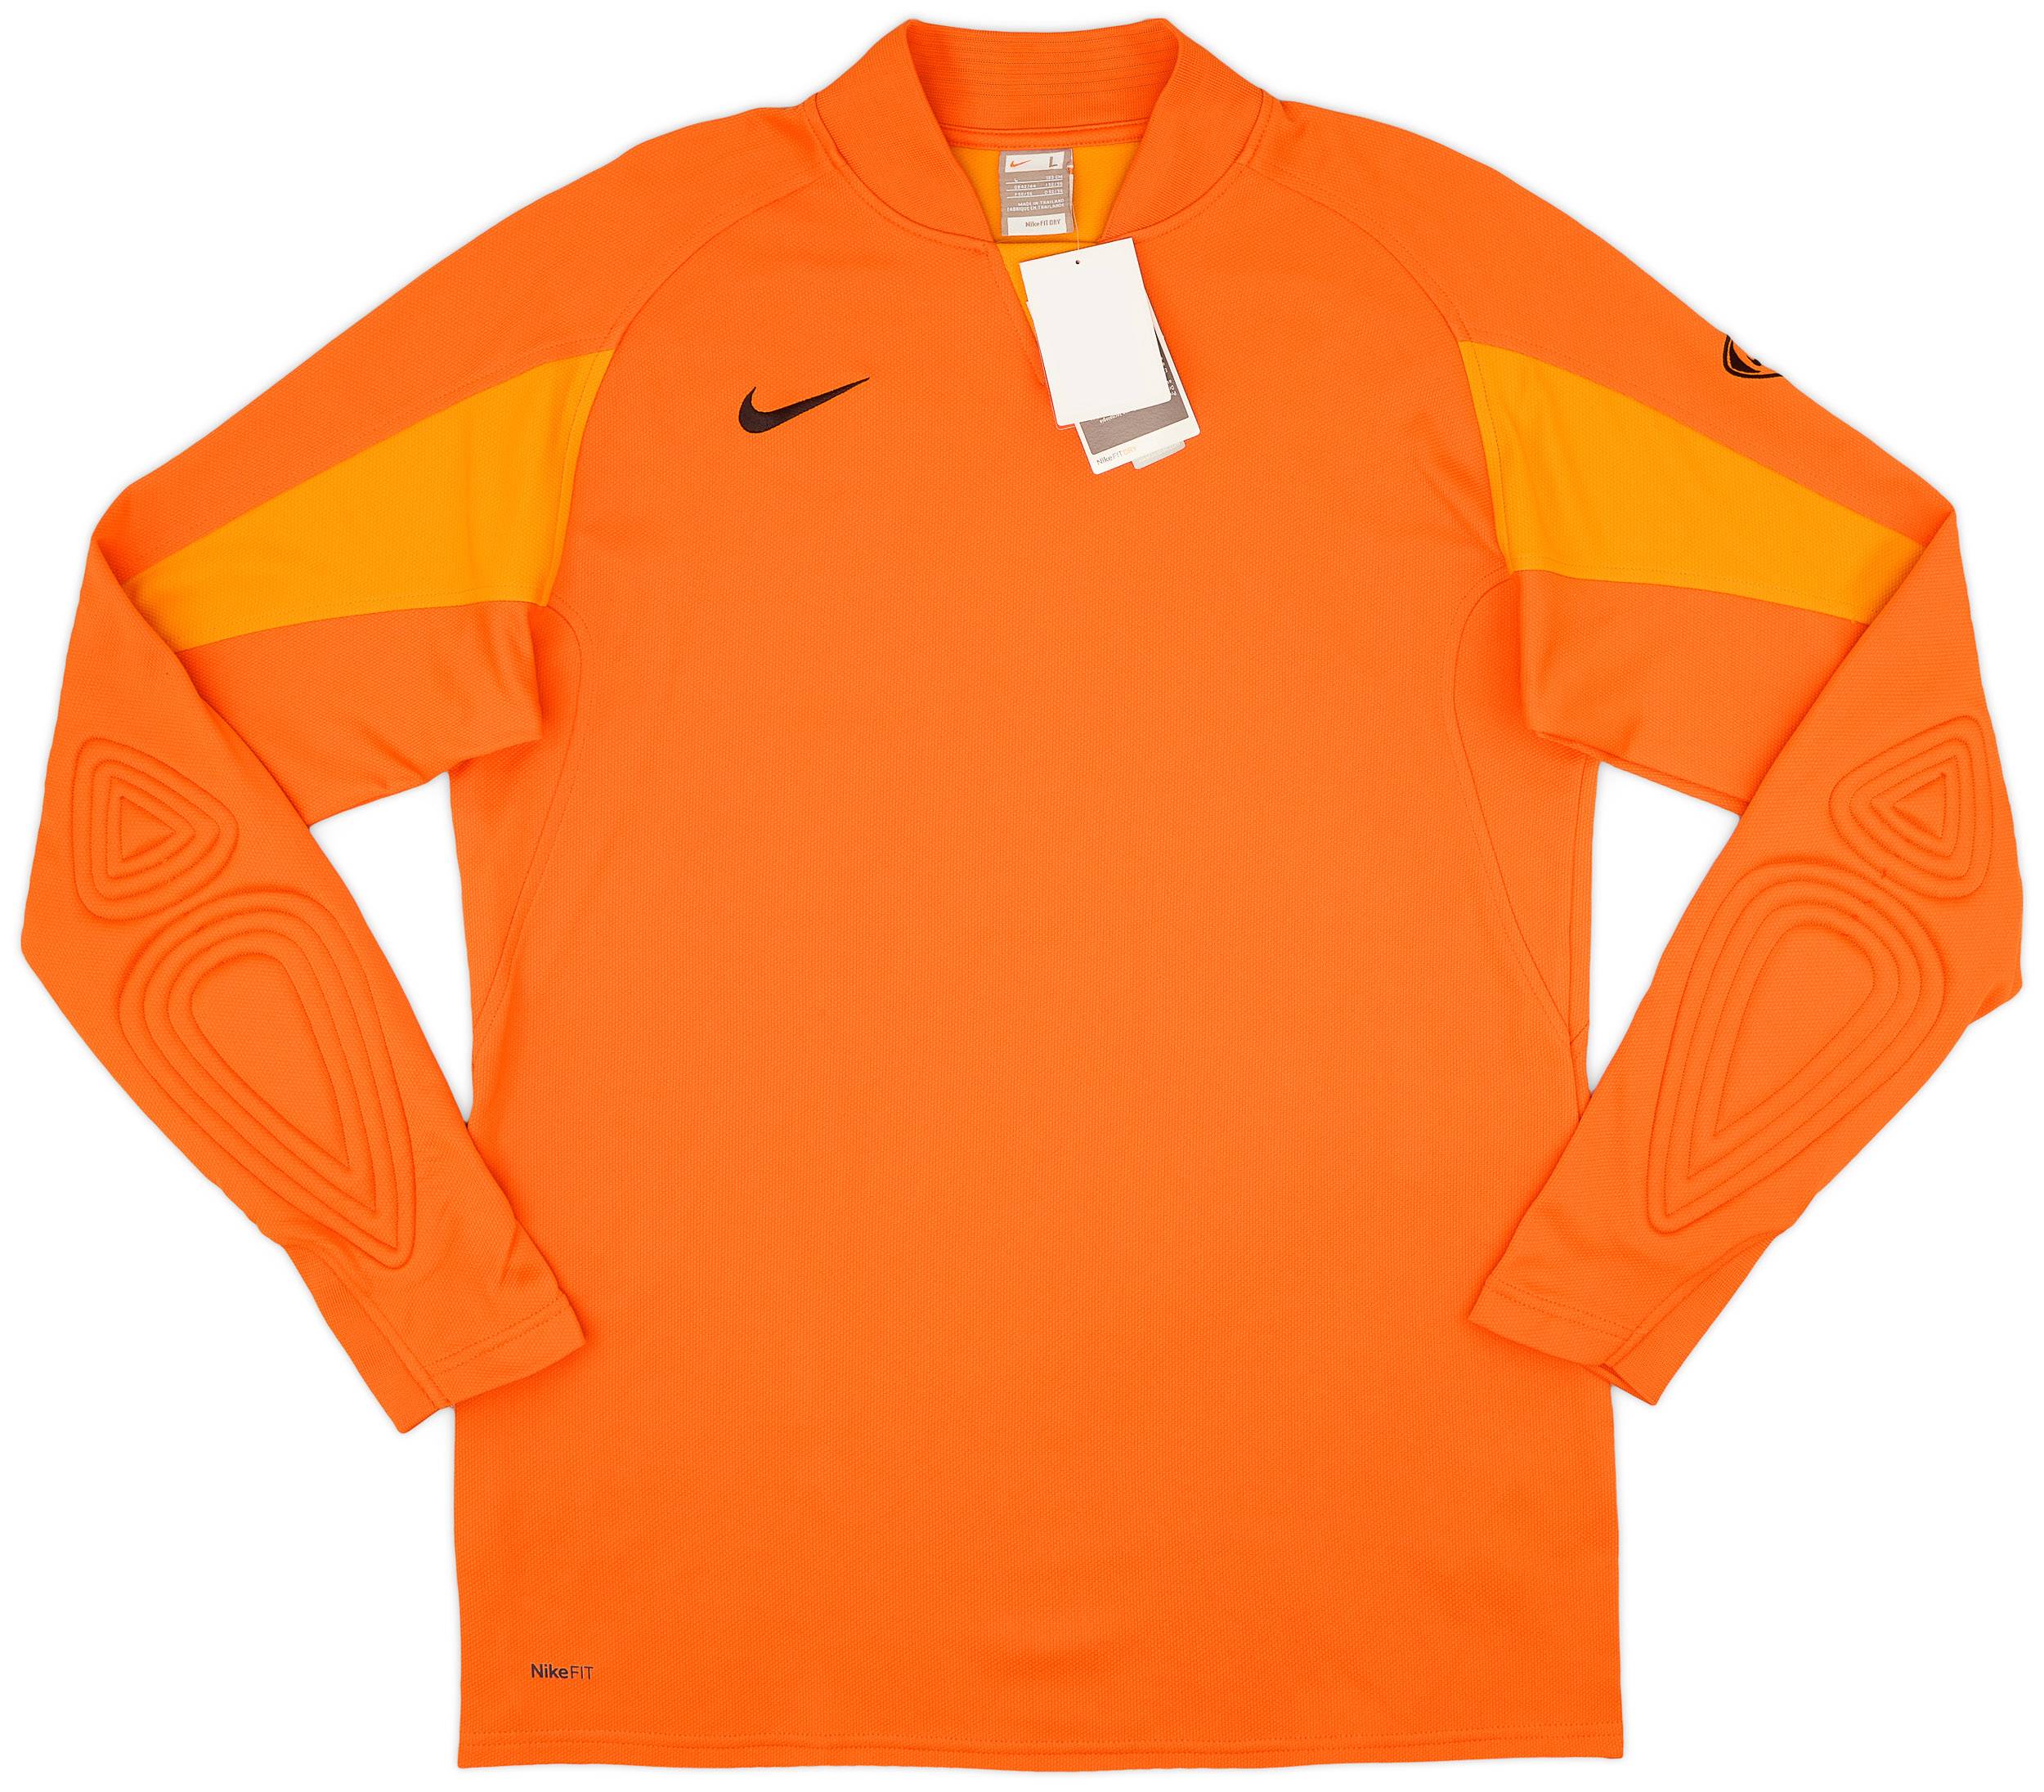 2006-07 Nike Template GK Shirt - 9/10 - (L)